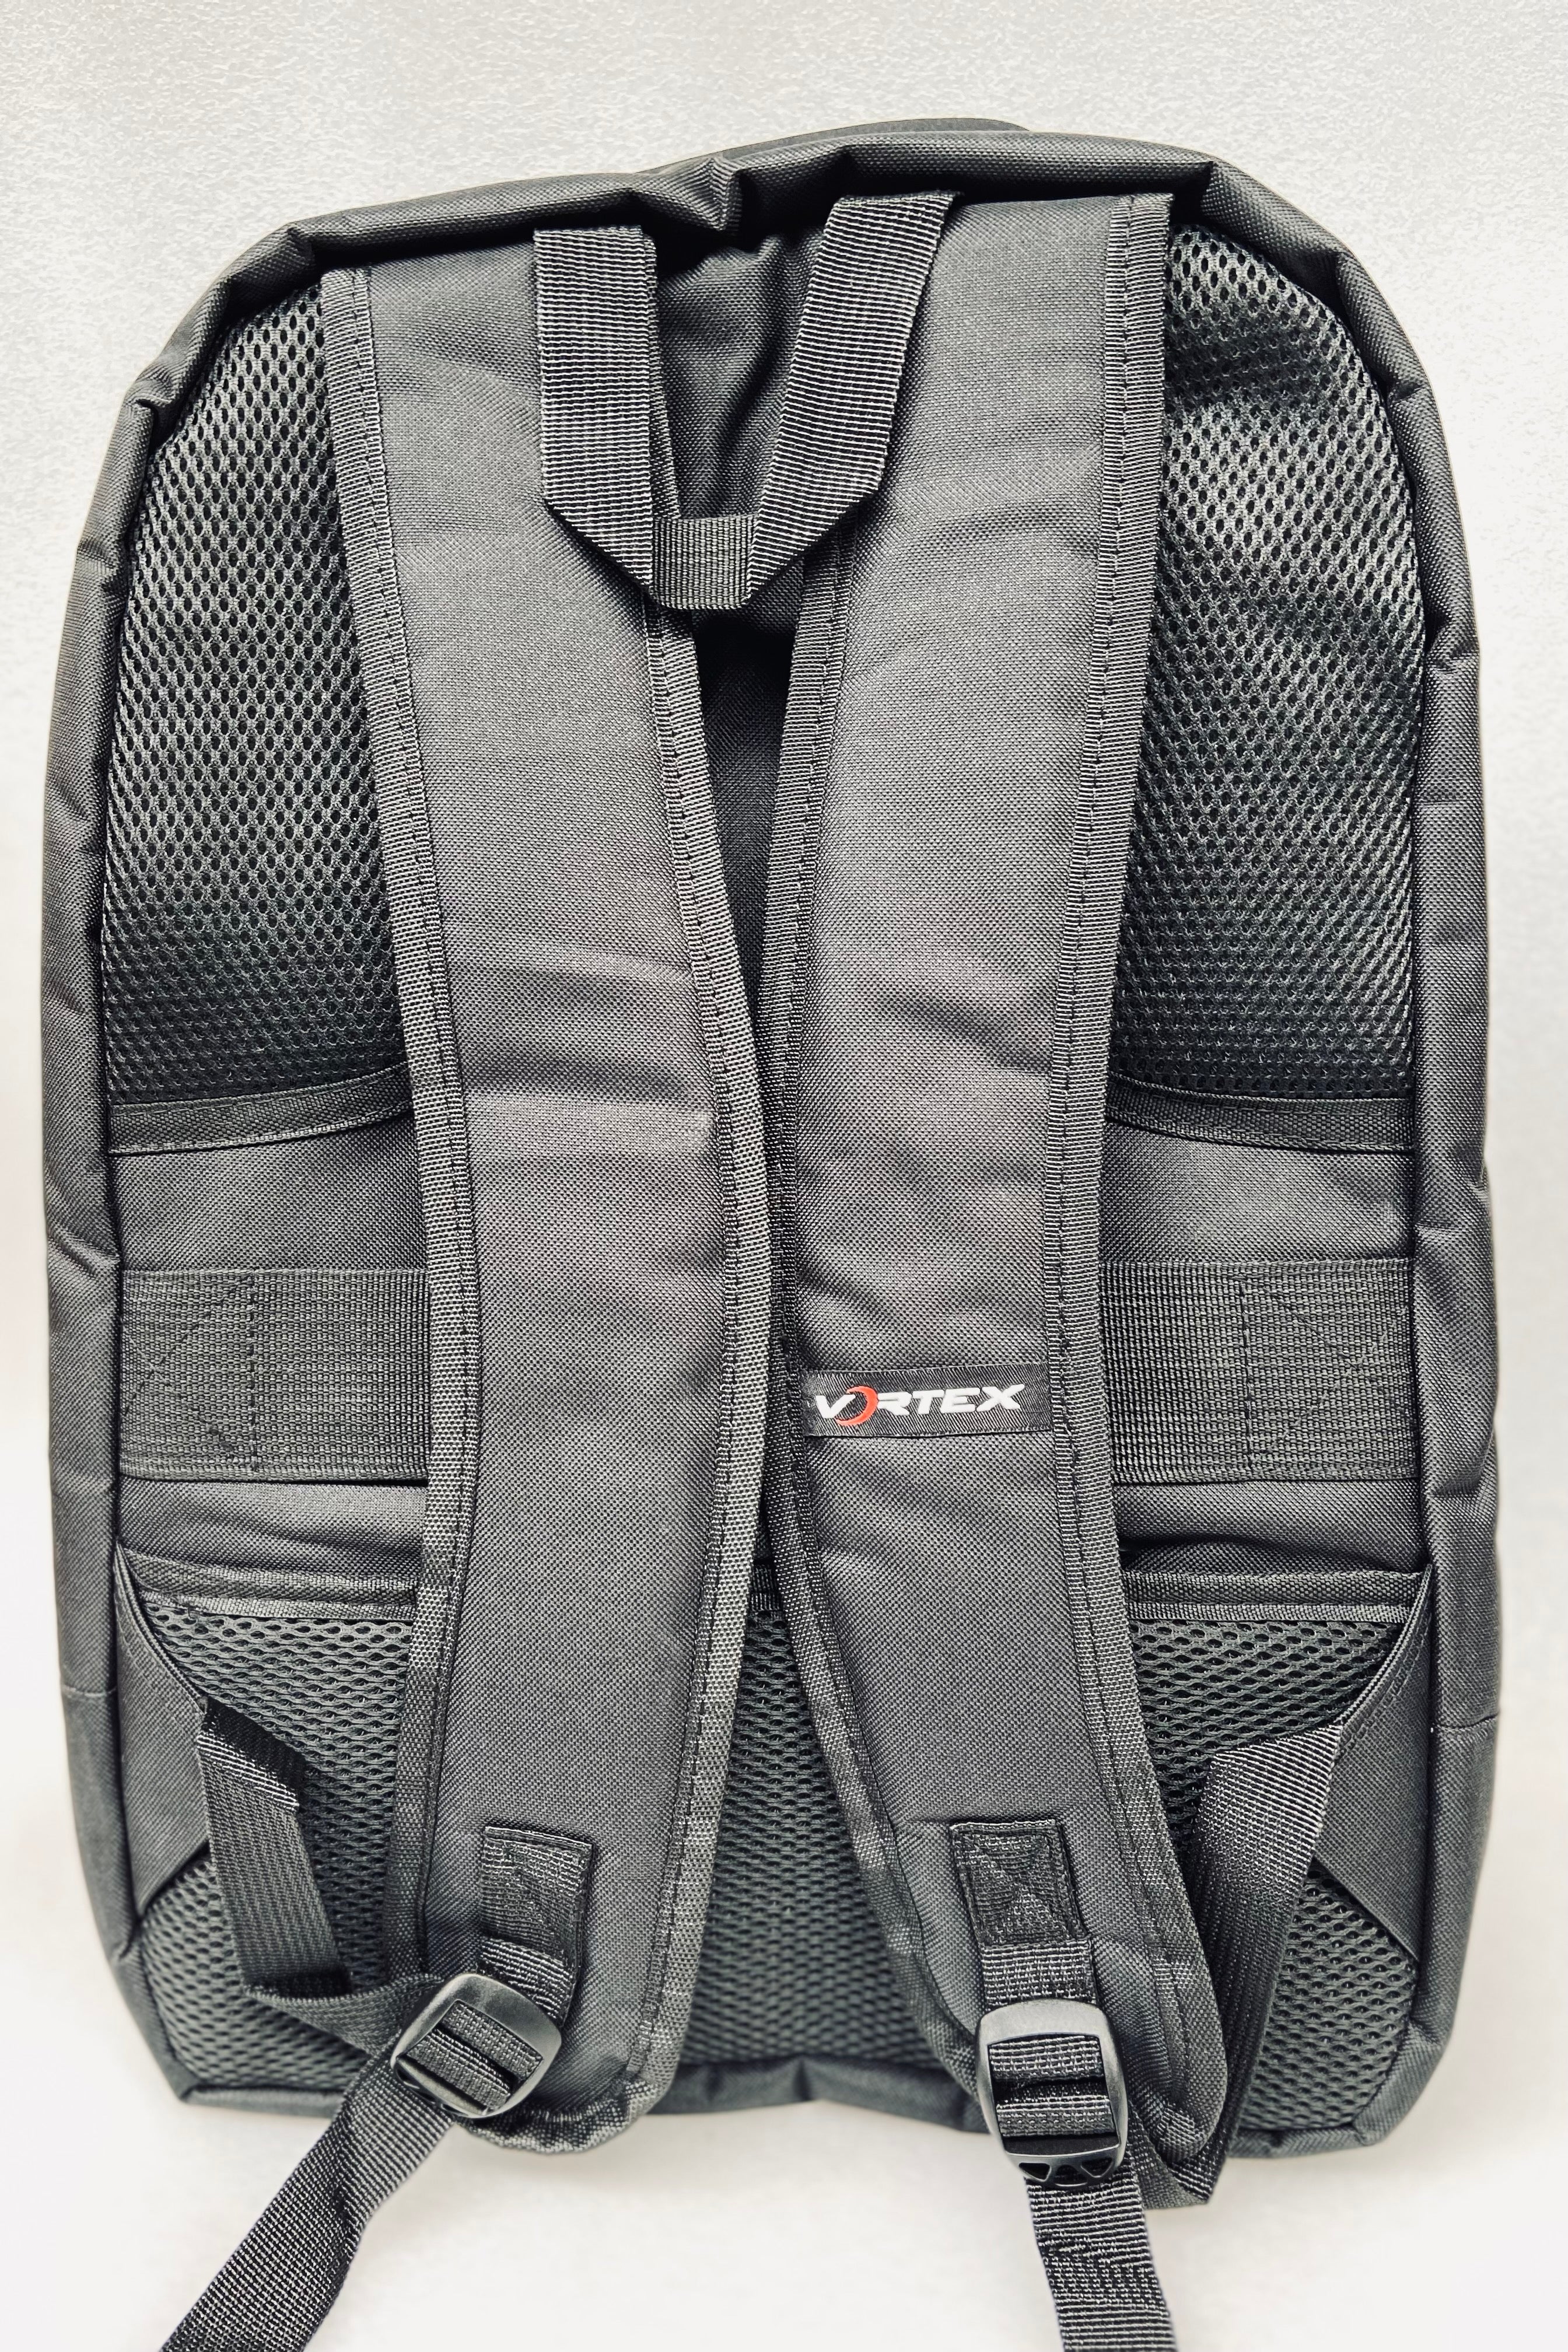 Sedona Shoulder Harness for Arizona Vortex Leg Bags | CMC PRO